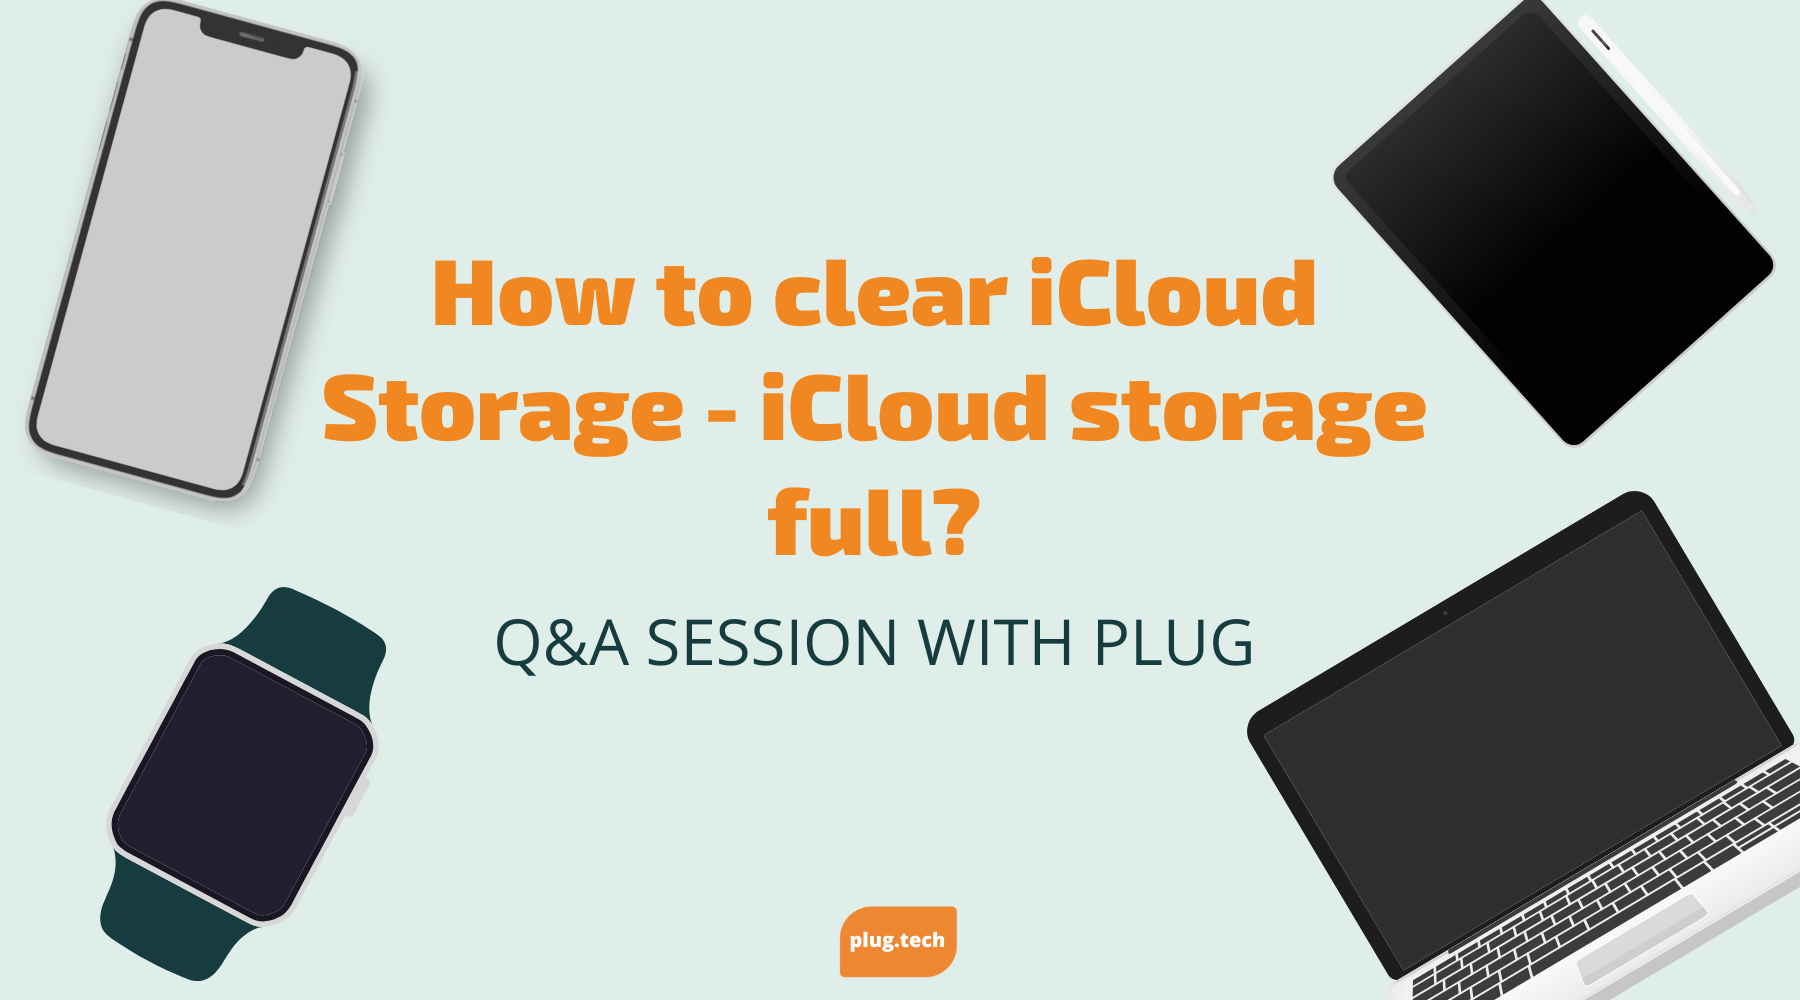 How to clear iCloud Storage - iCloud storage full?